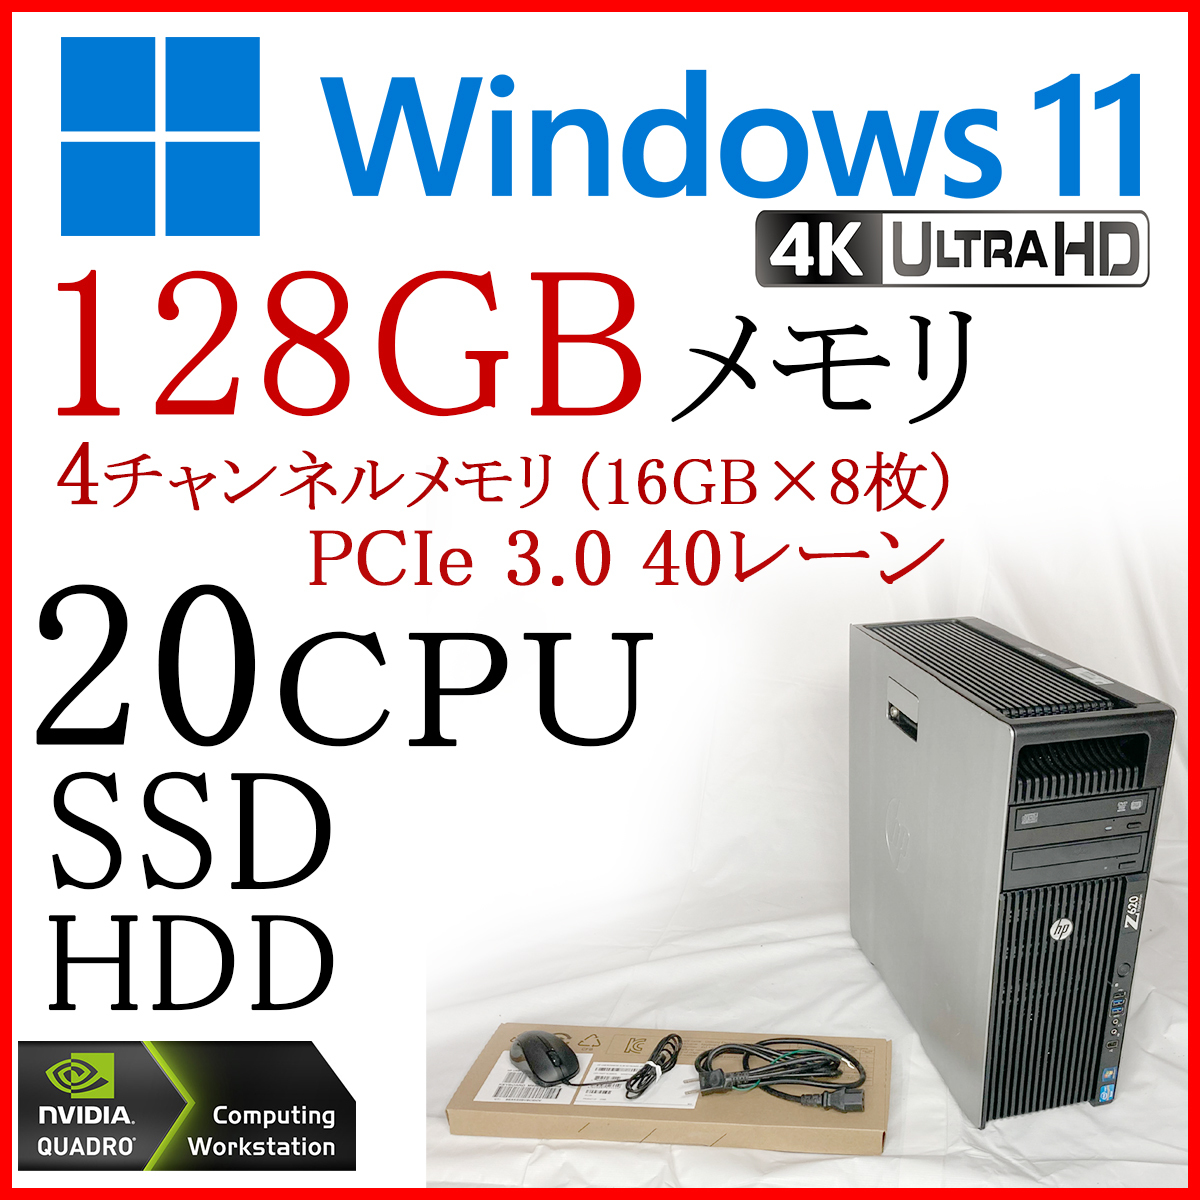 20CPU 128GB 大量メモリ i7 i9超 Xeon E5 HP Z620 SSD 240GB HDD 500gb 4K Windows11 まとめ 本体 キーボード マウス ケーブルセット YQK_画像1